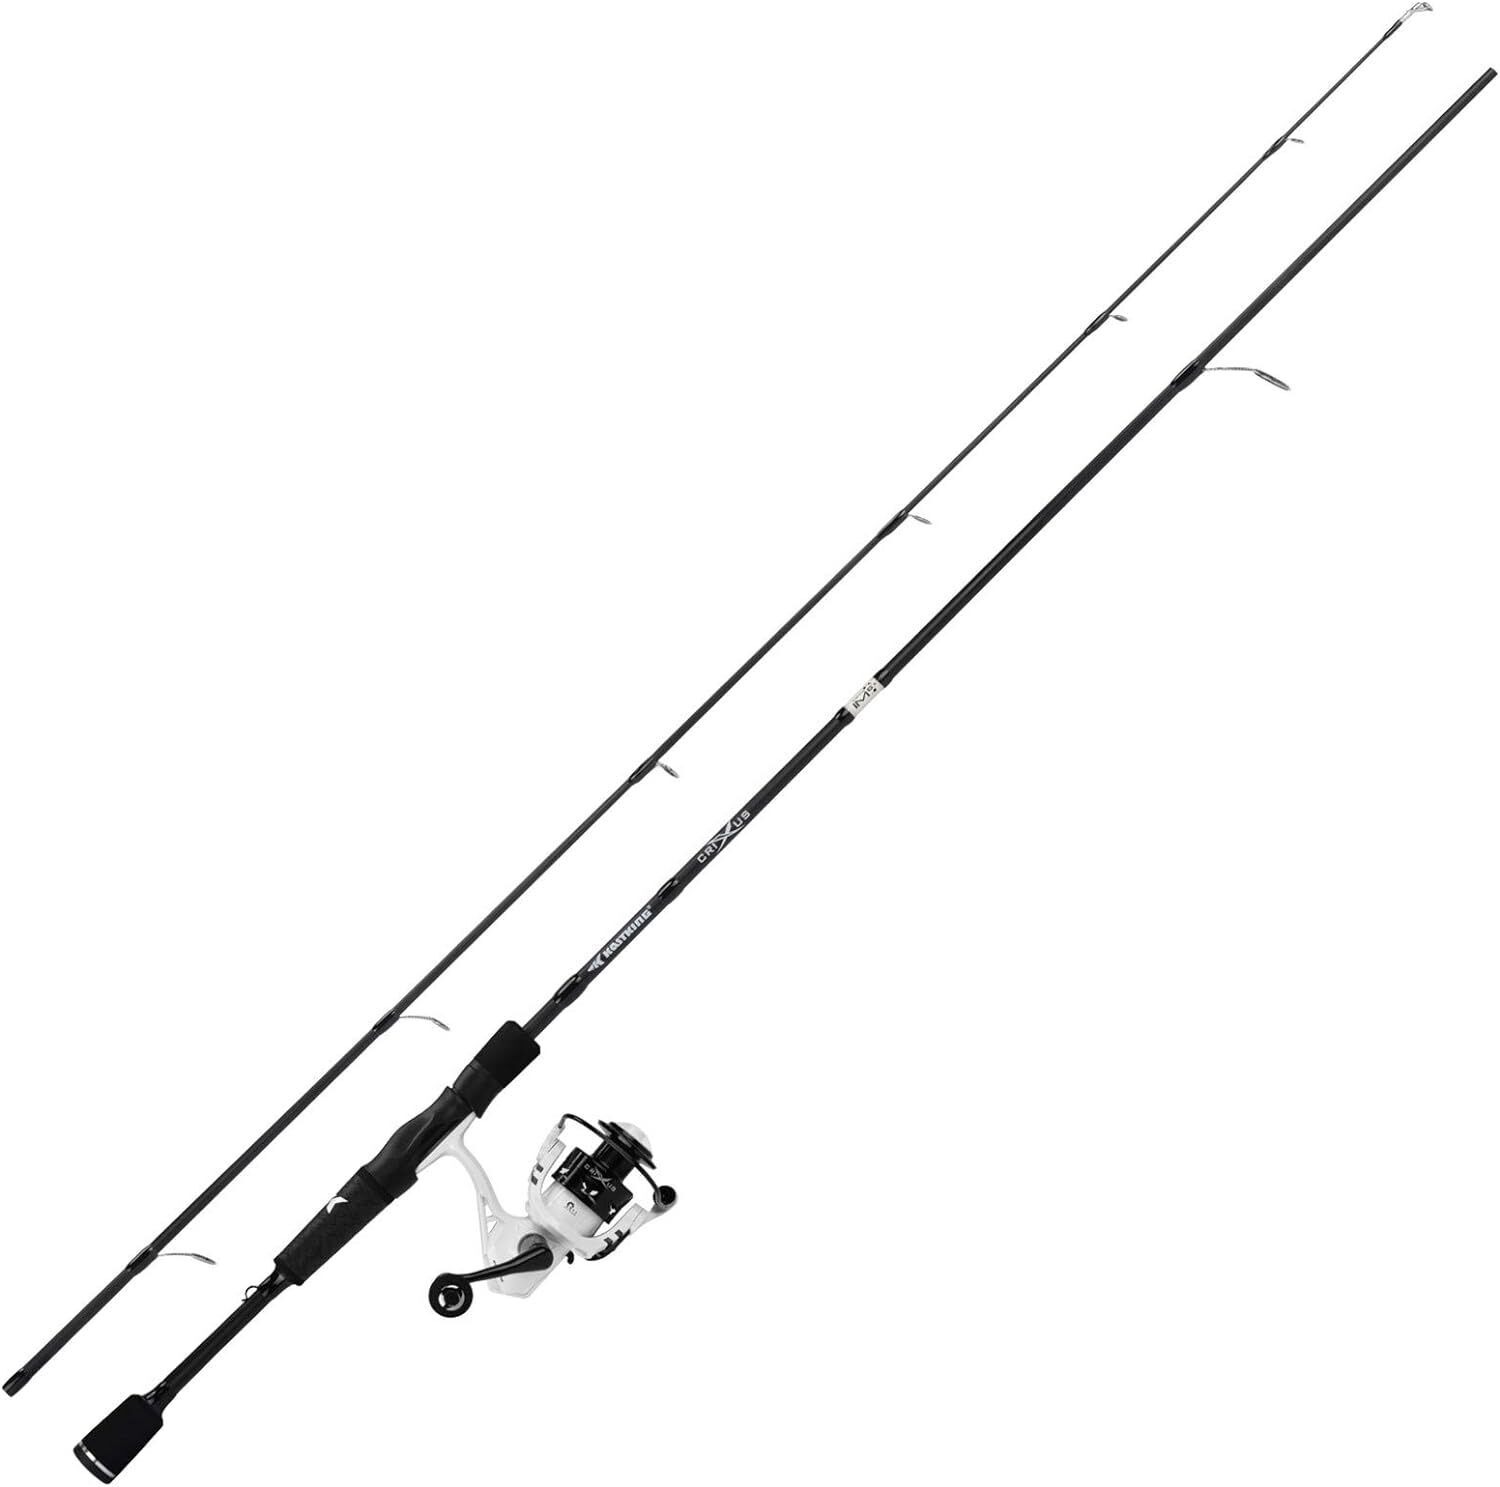 Crixus Fishing Rod and Reel Combo, Baitcasting Combo, IM6 Graphite Blank Rods